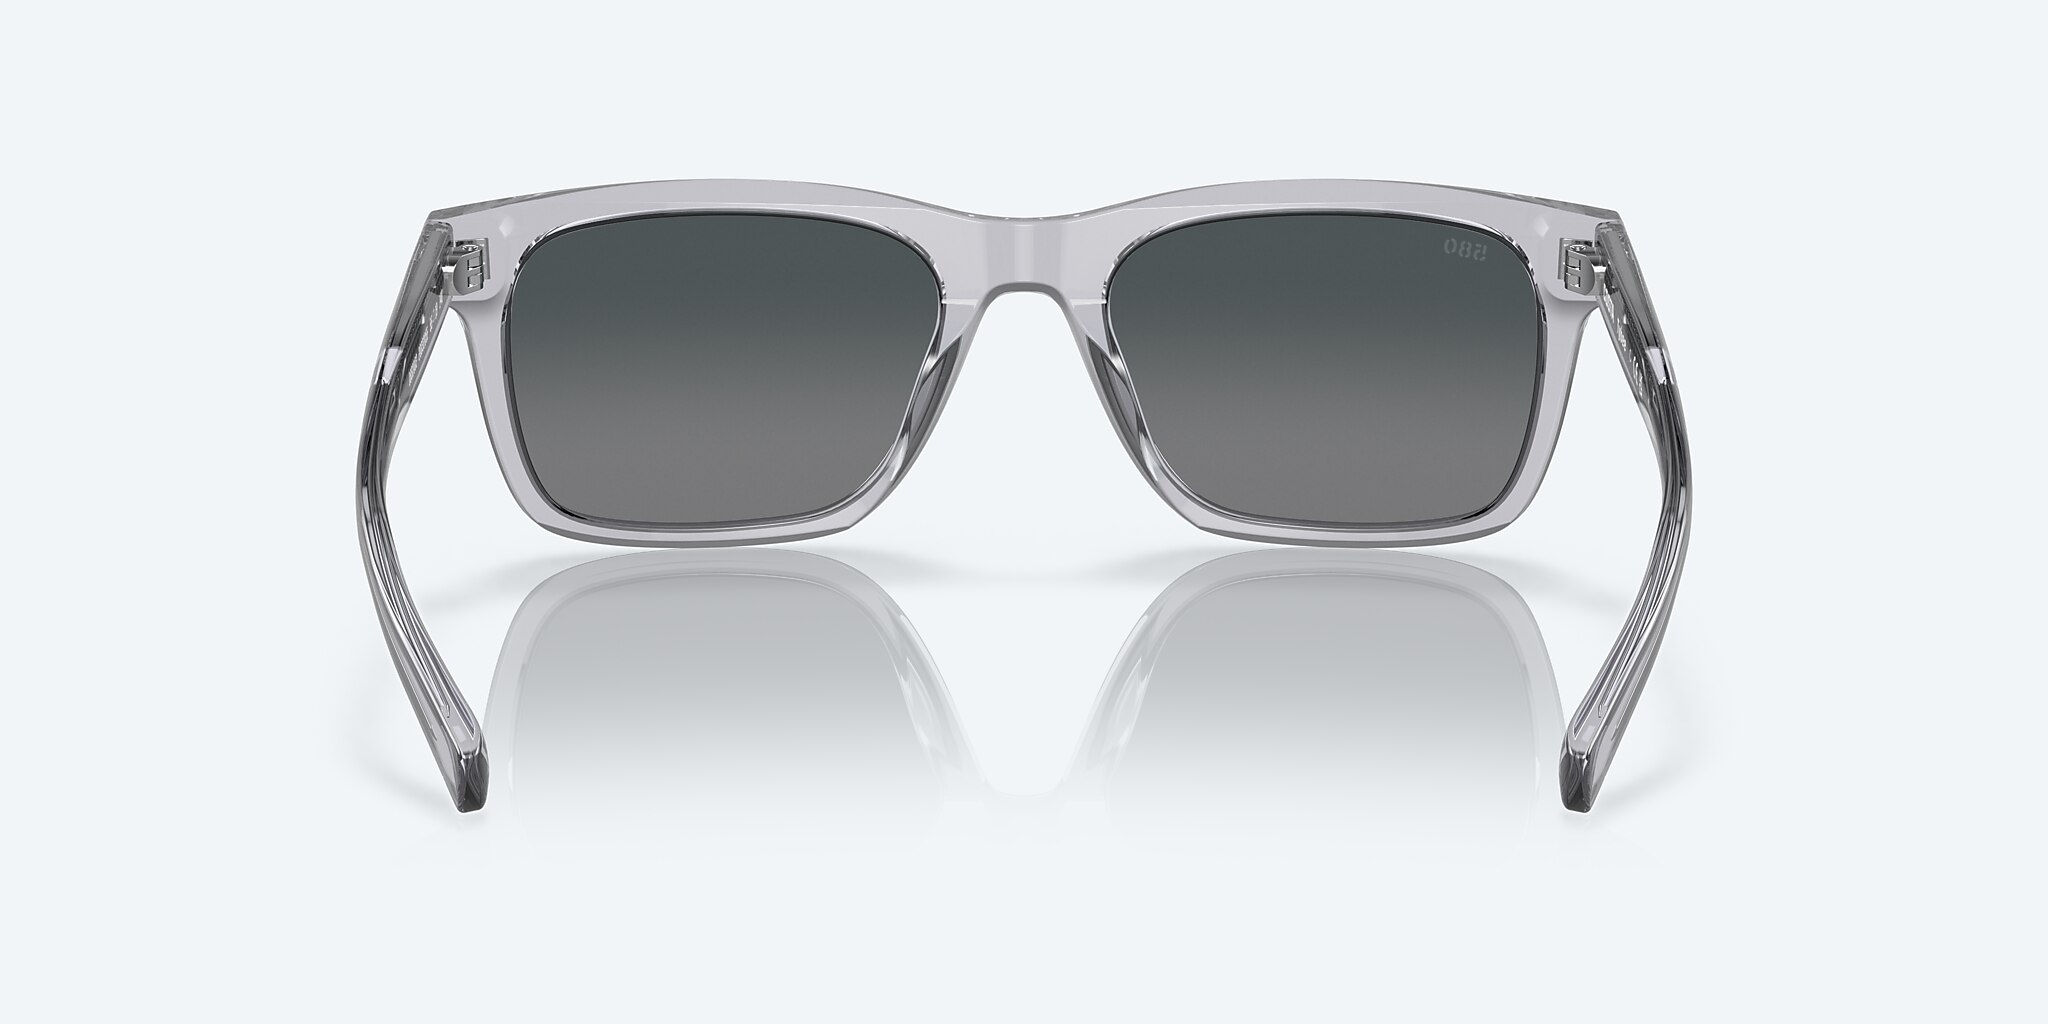 Tybee Polarized Sunglasses in Gray Gradient